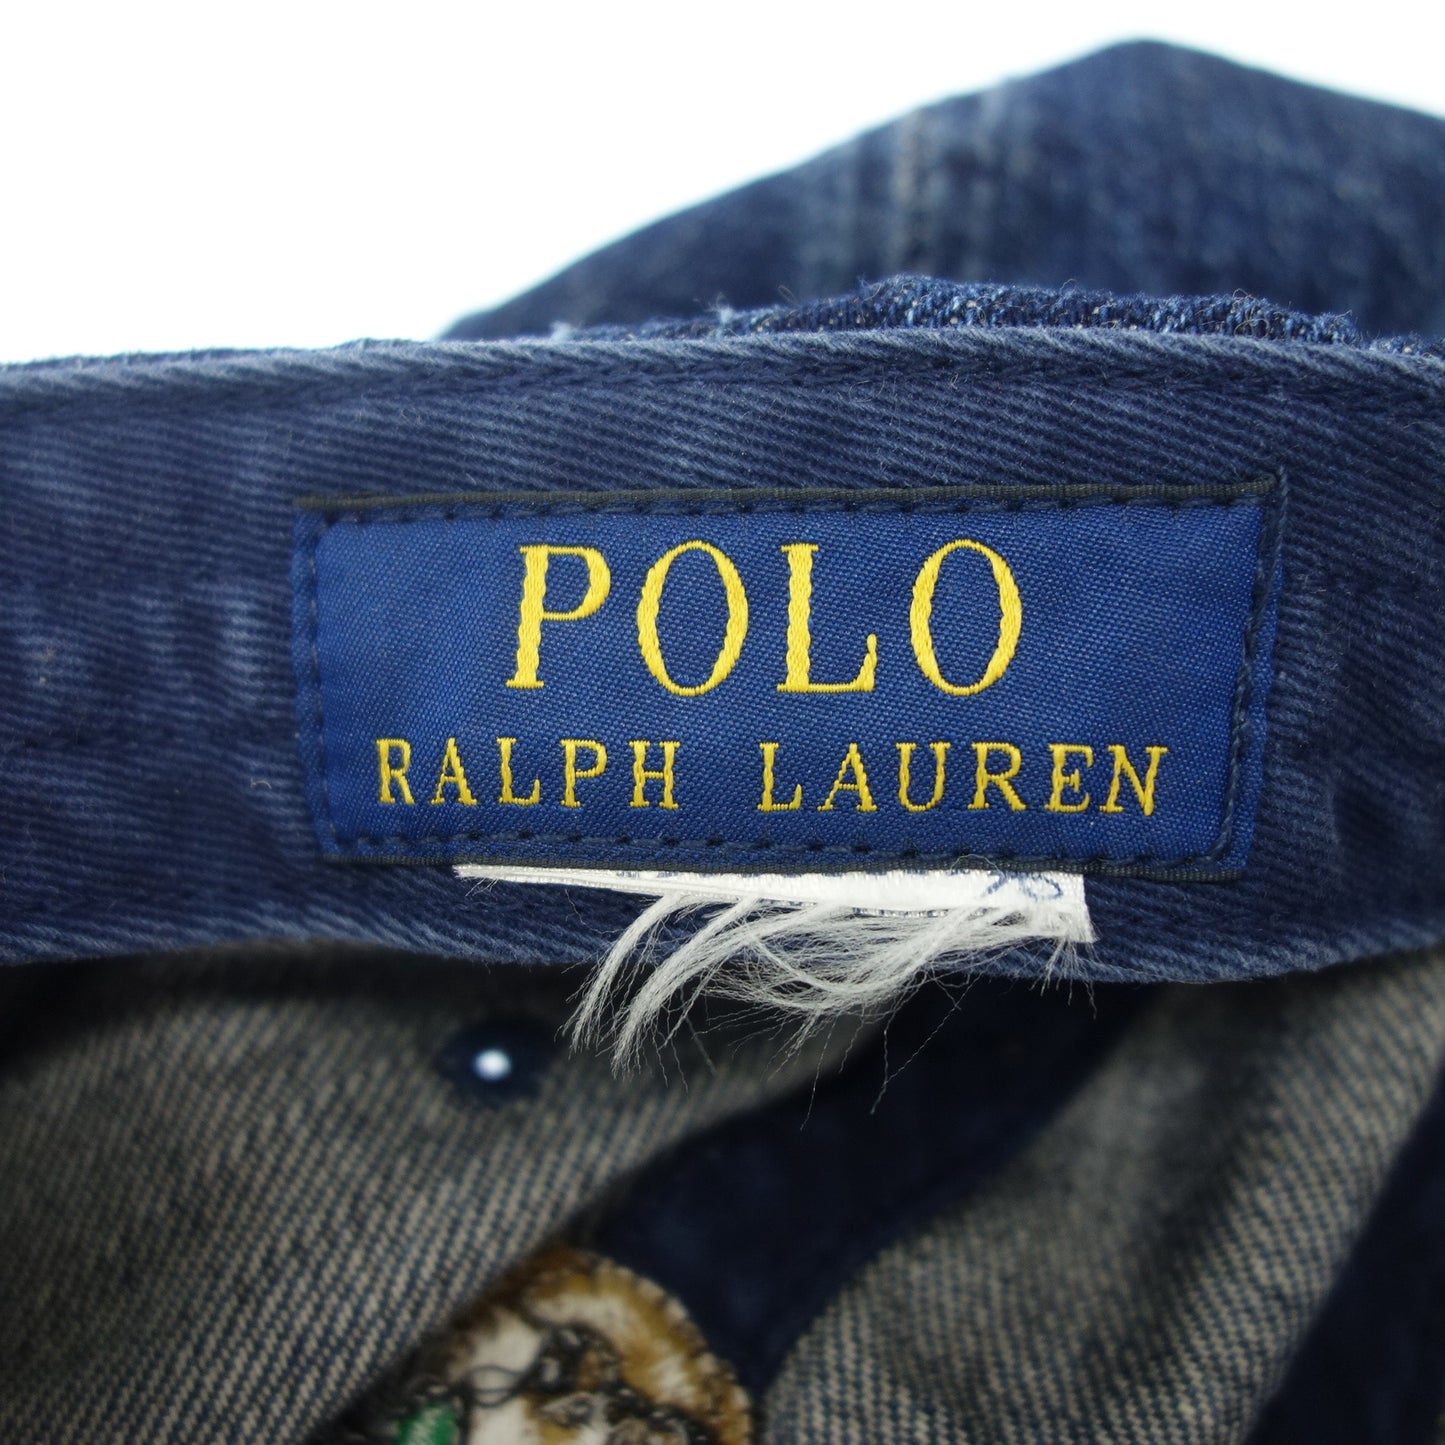 Polo Ralph Lauren 帽子 牛仔布 小熊刺绣 靛蓝 POLO RALPH LAUREN [AFI22] [二手] 